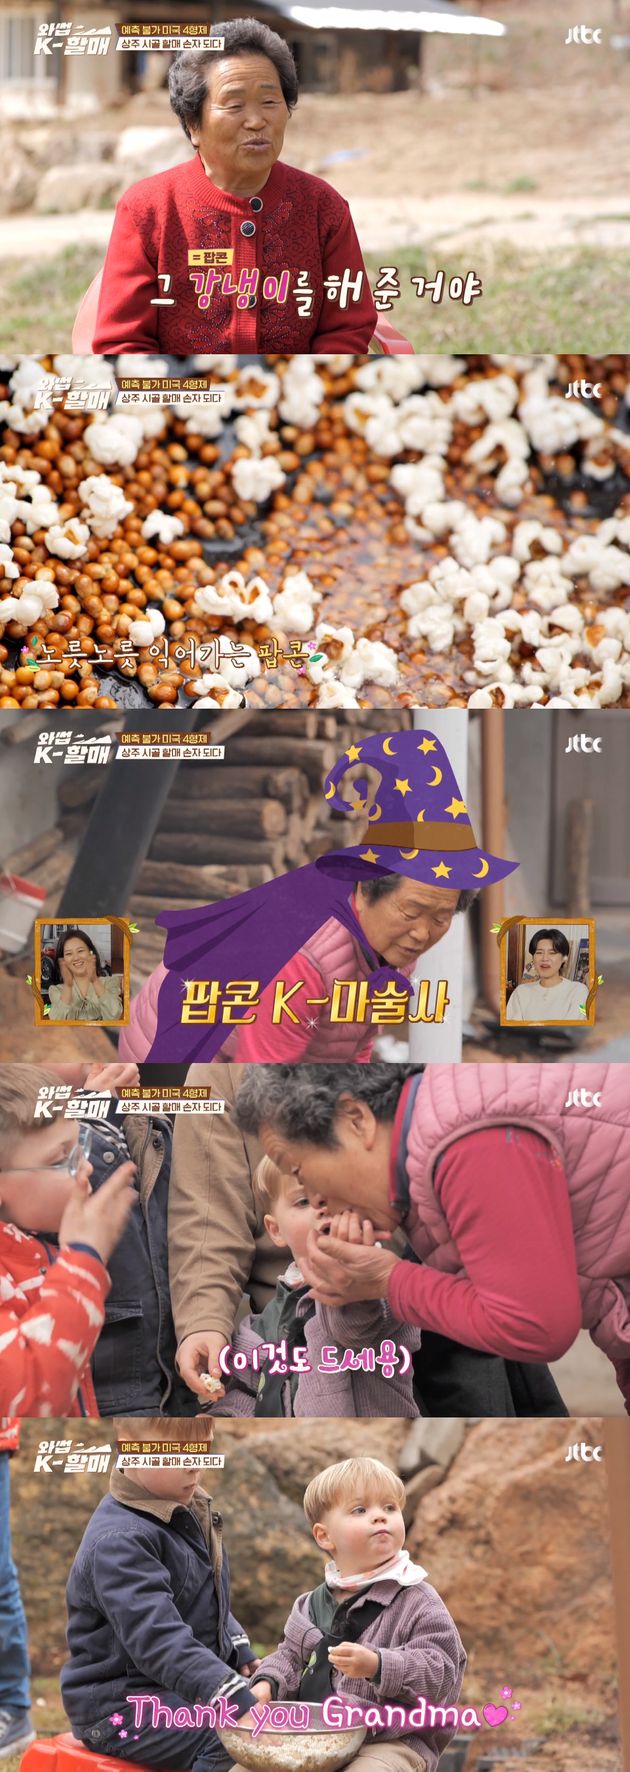 JTBC 예능프로그램 '와썹 K-할매'